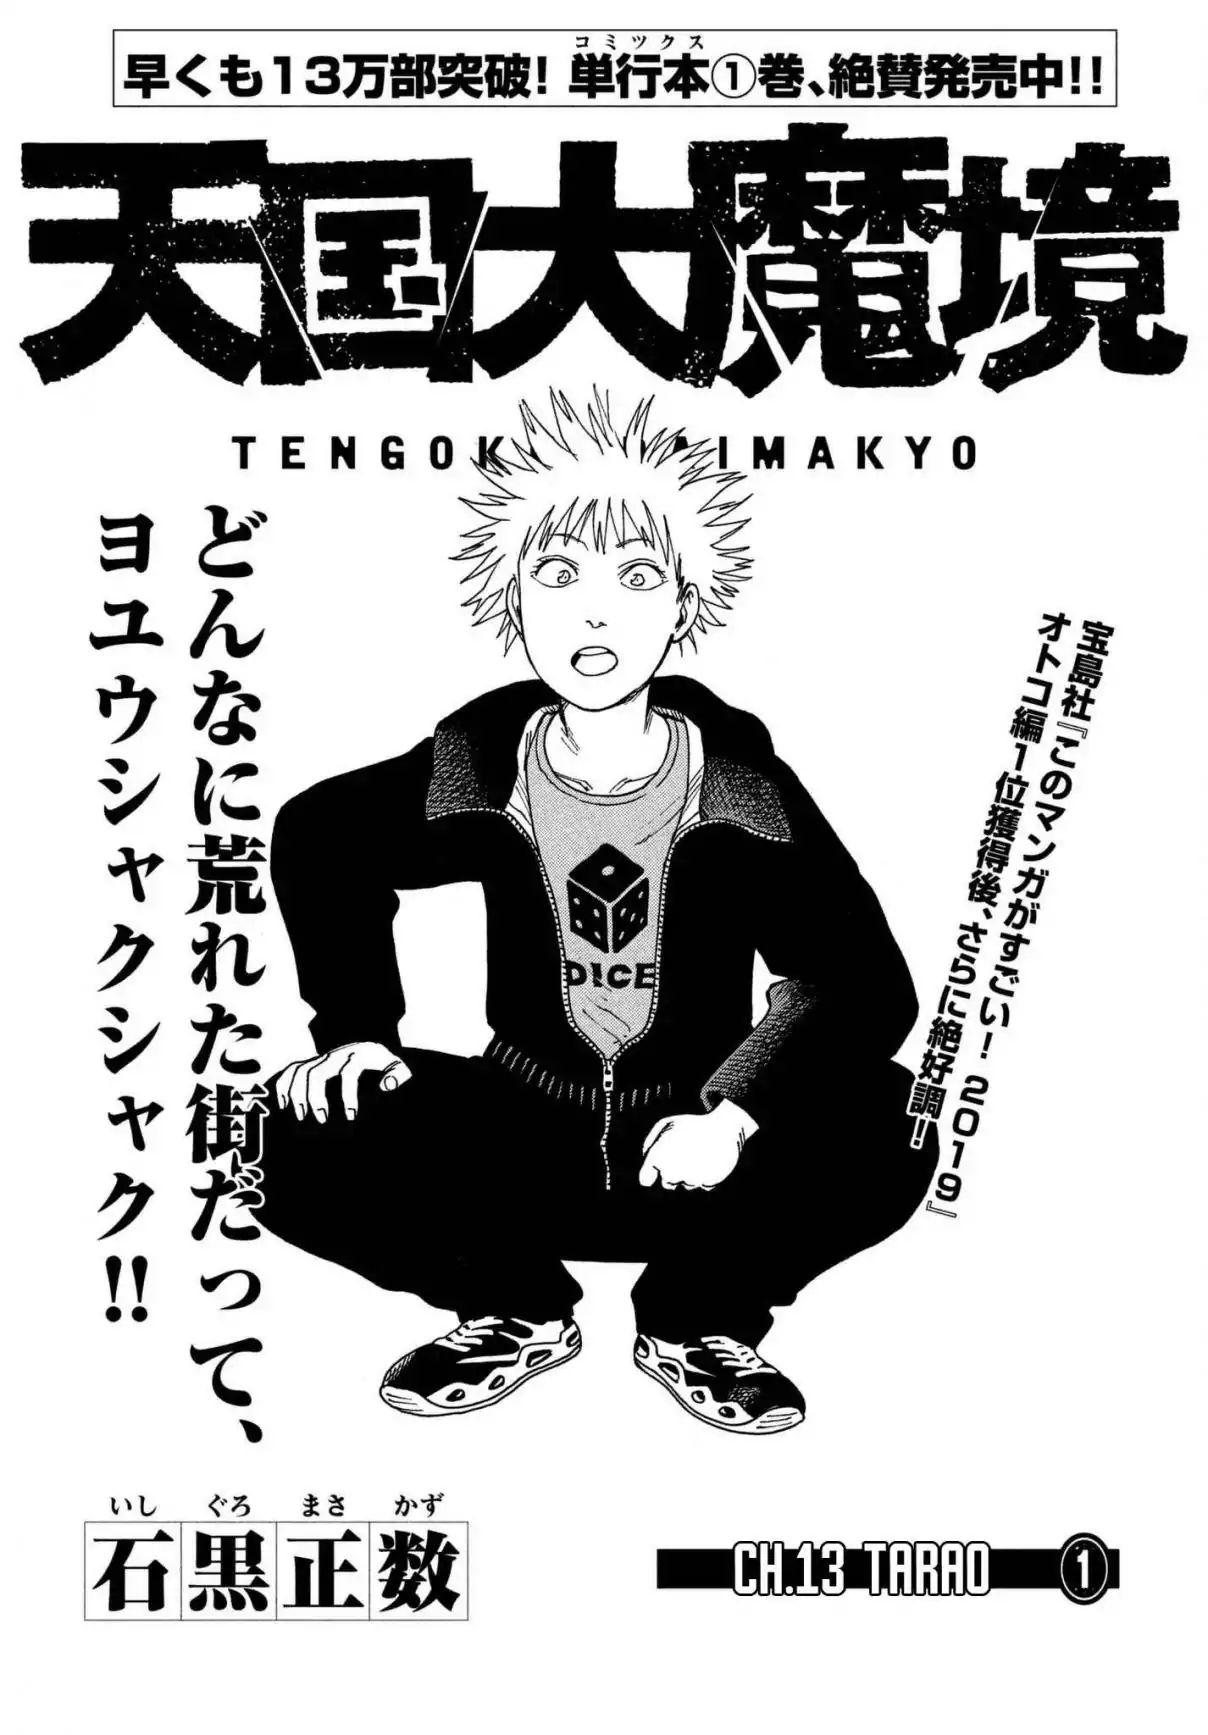 Read Tengoku Daimakyou Vol.1 Chapter 7: Tomato Heaven - Mangadex